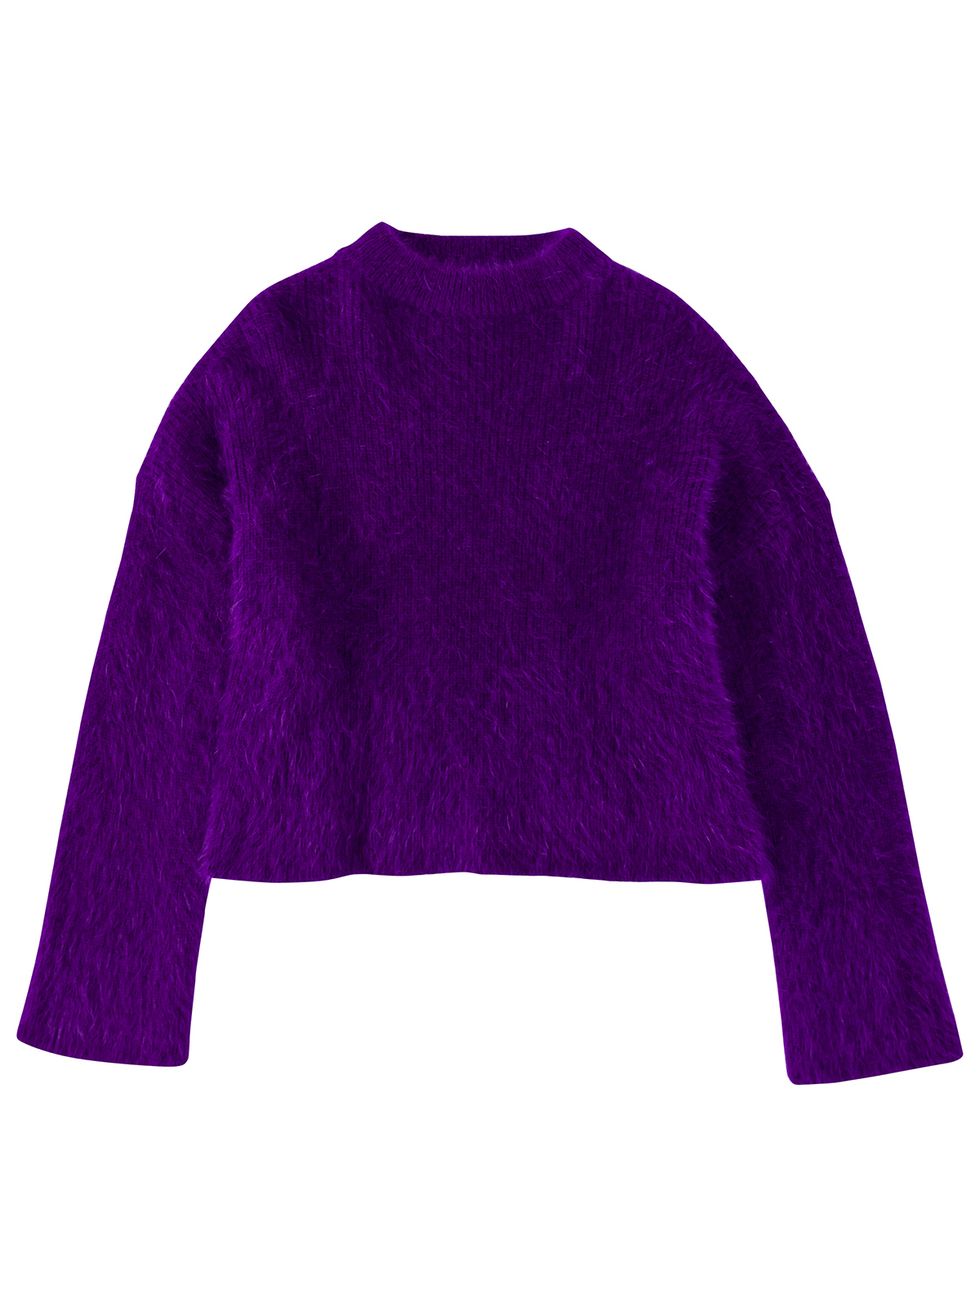 Clothing, Violet, Purple, Sleeve, Outerwear, Magenta, Jacket, Sweater, Bolero jacket, Fur, 